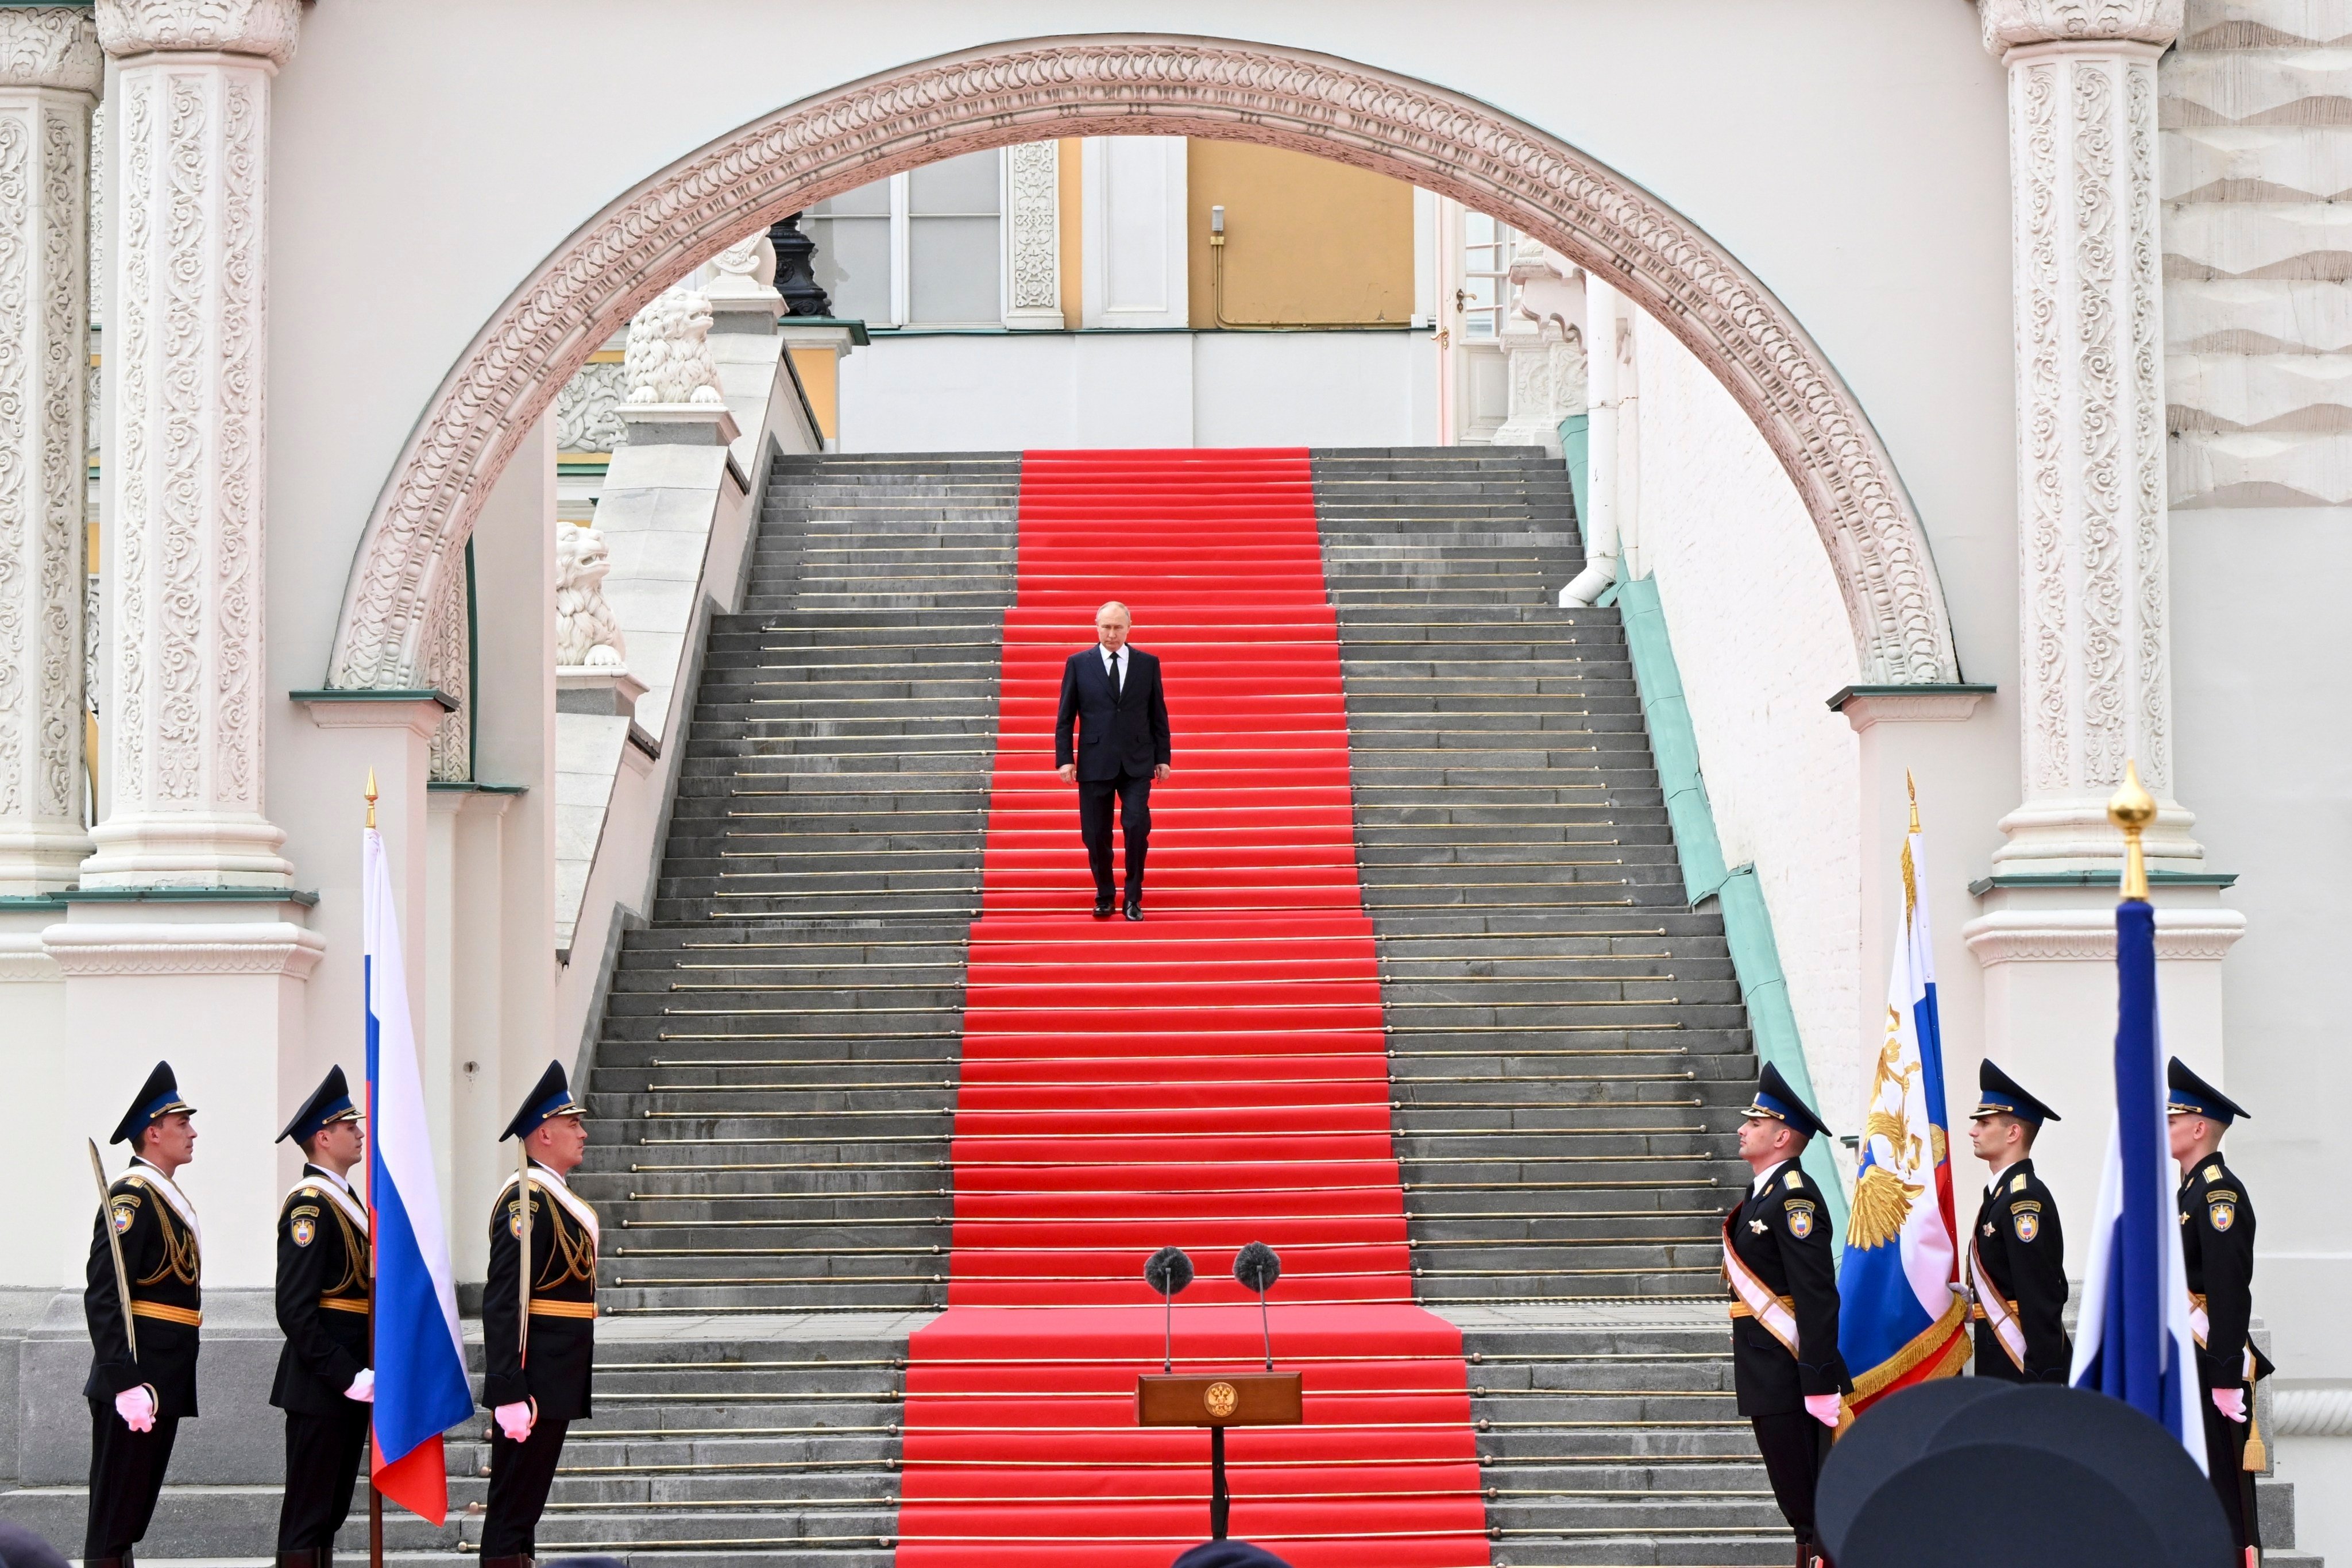 Russian President Vladimir Putin arrives to deliver a speech at the Kremlin in Moscow on June 27. Photo: Sputnik via AP